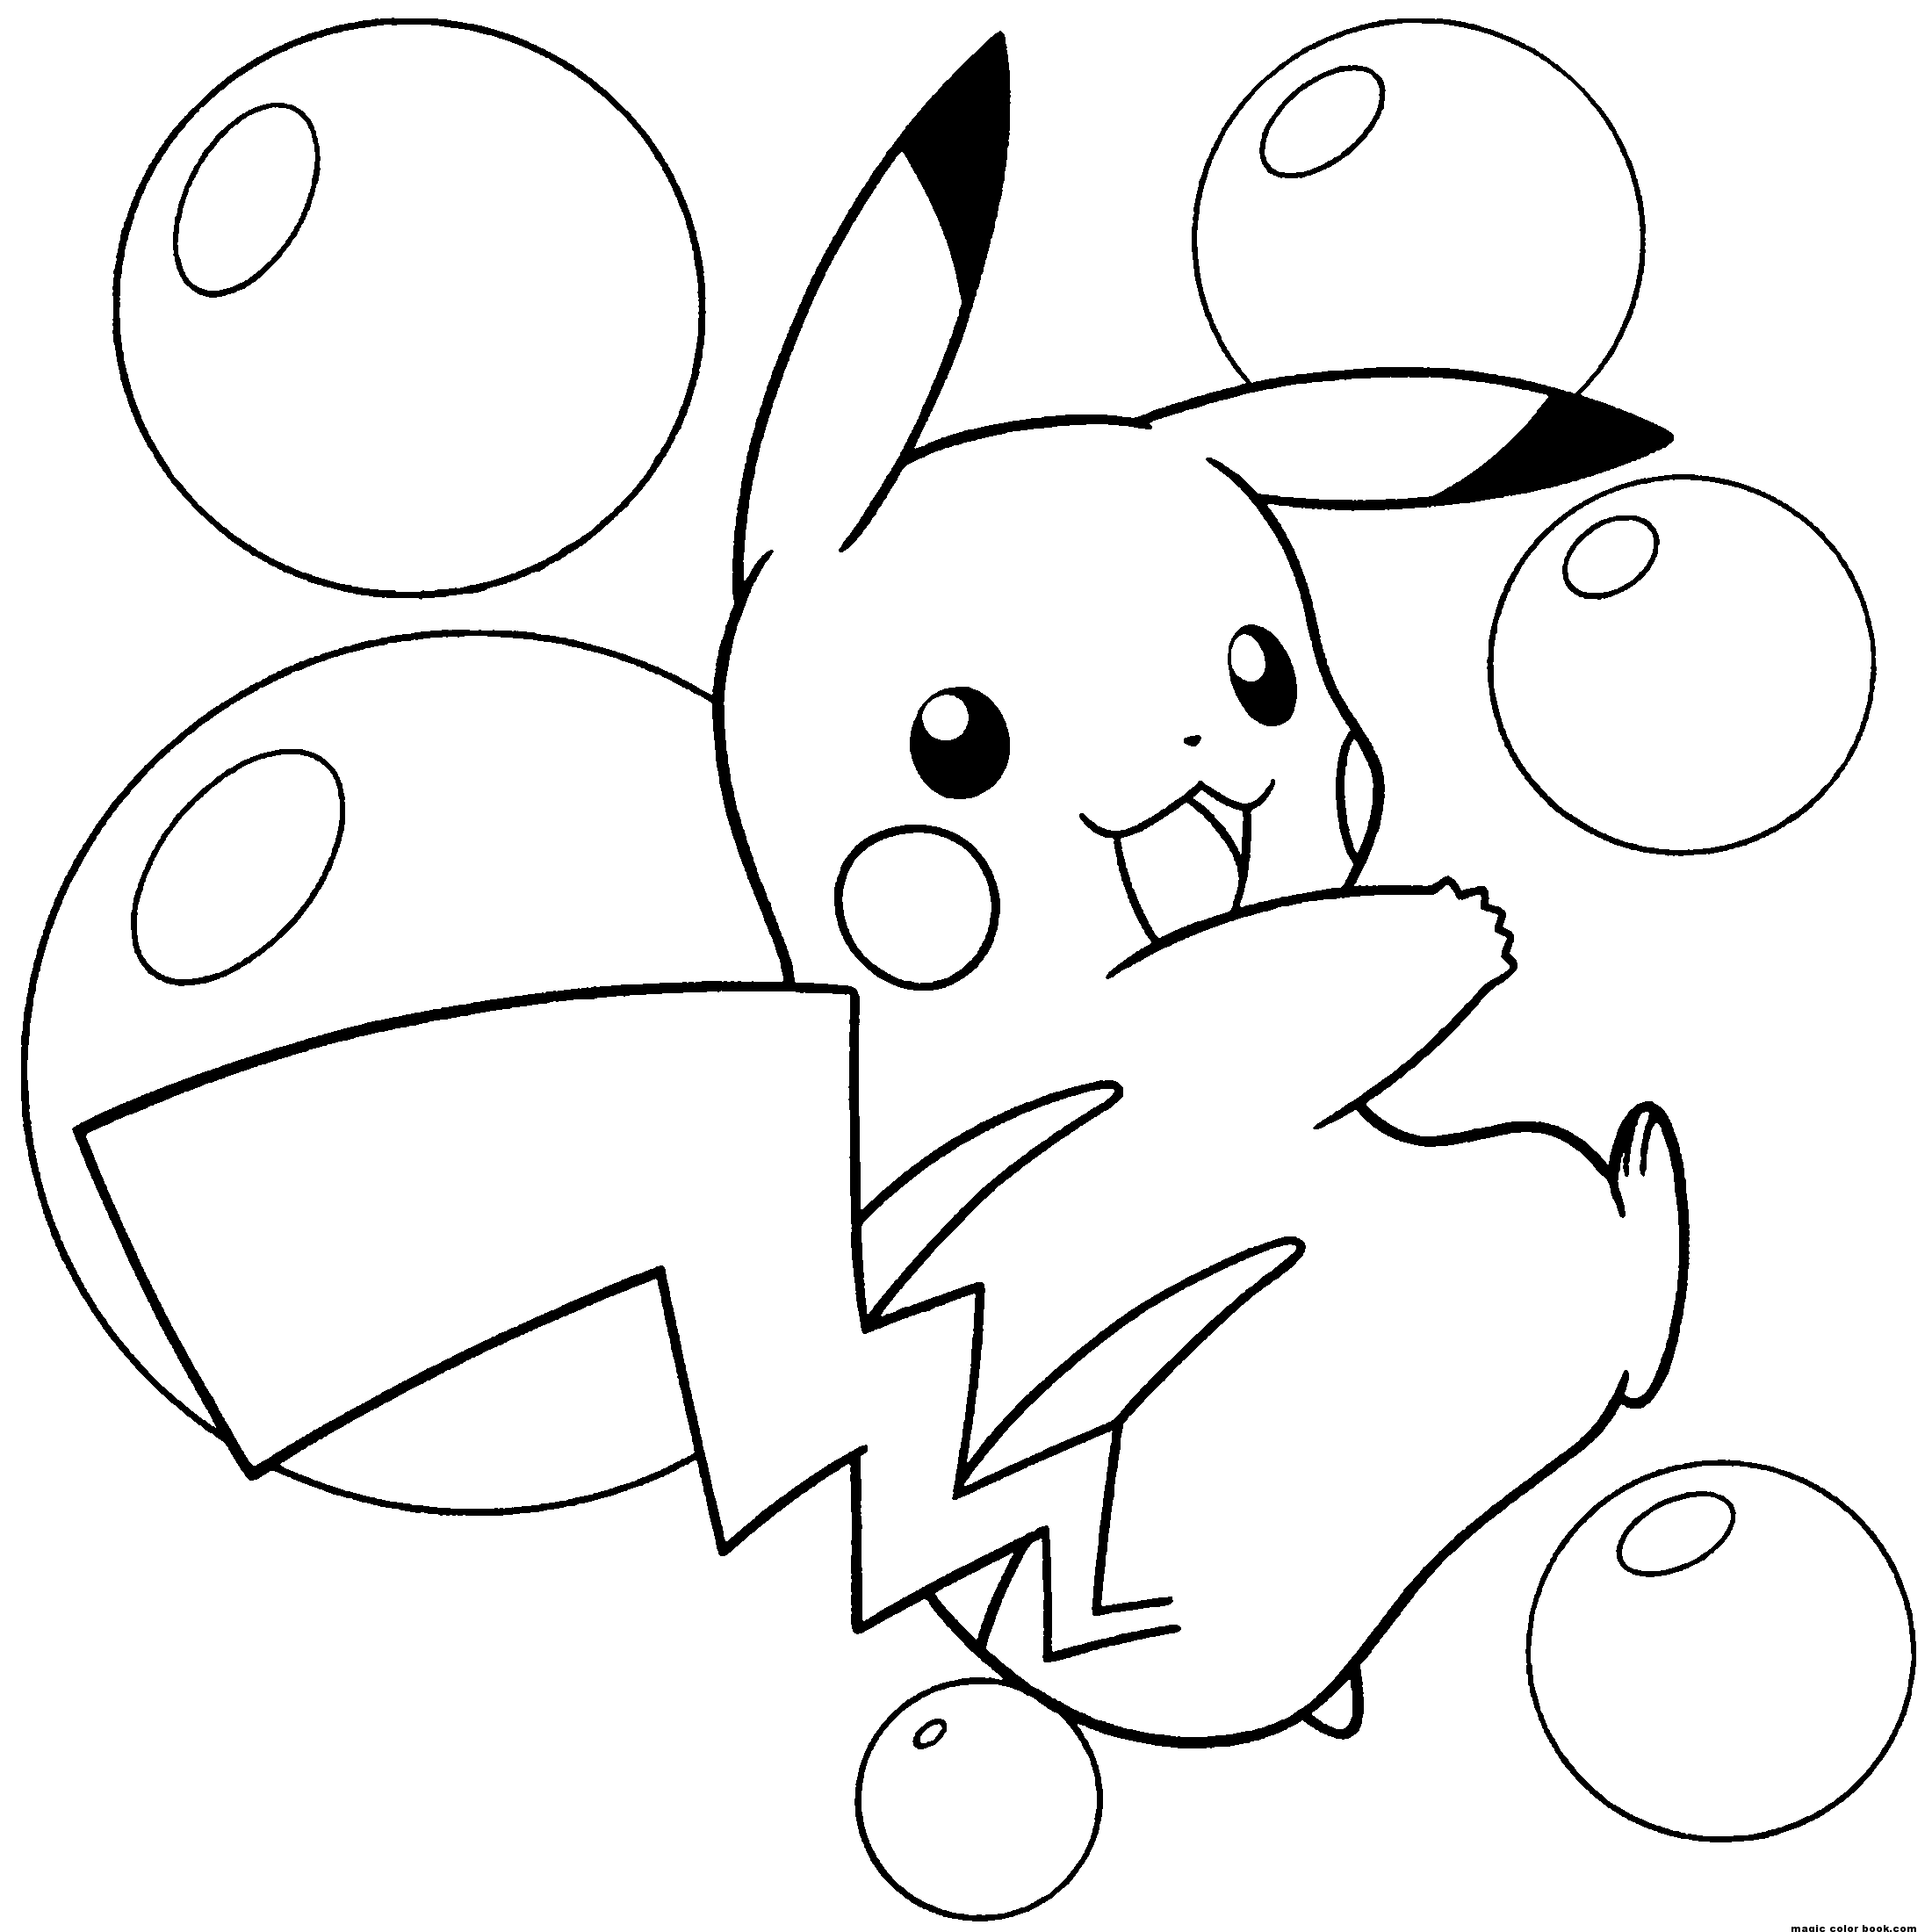 Simple Dibujos para colorear de Pokemon